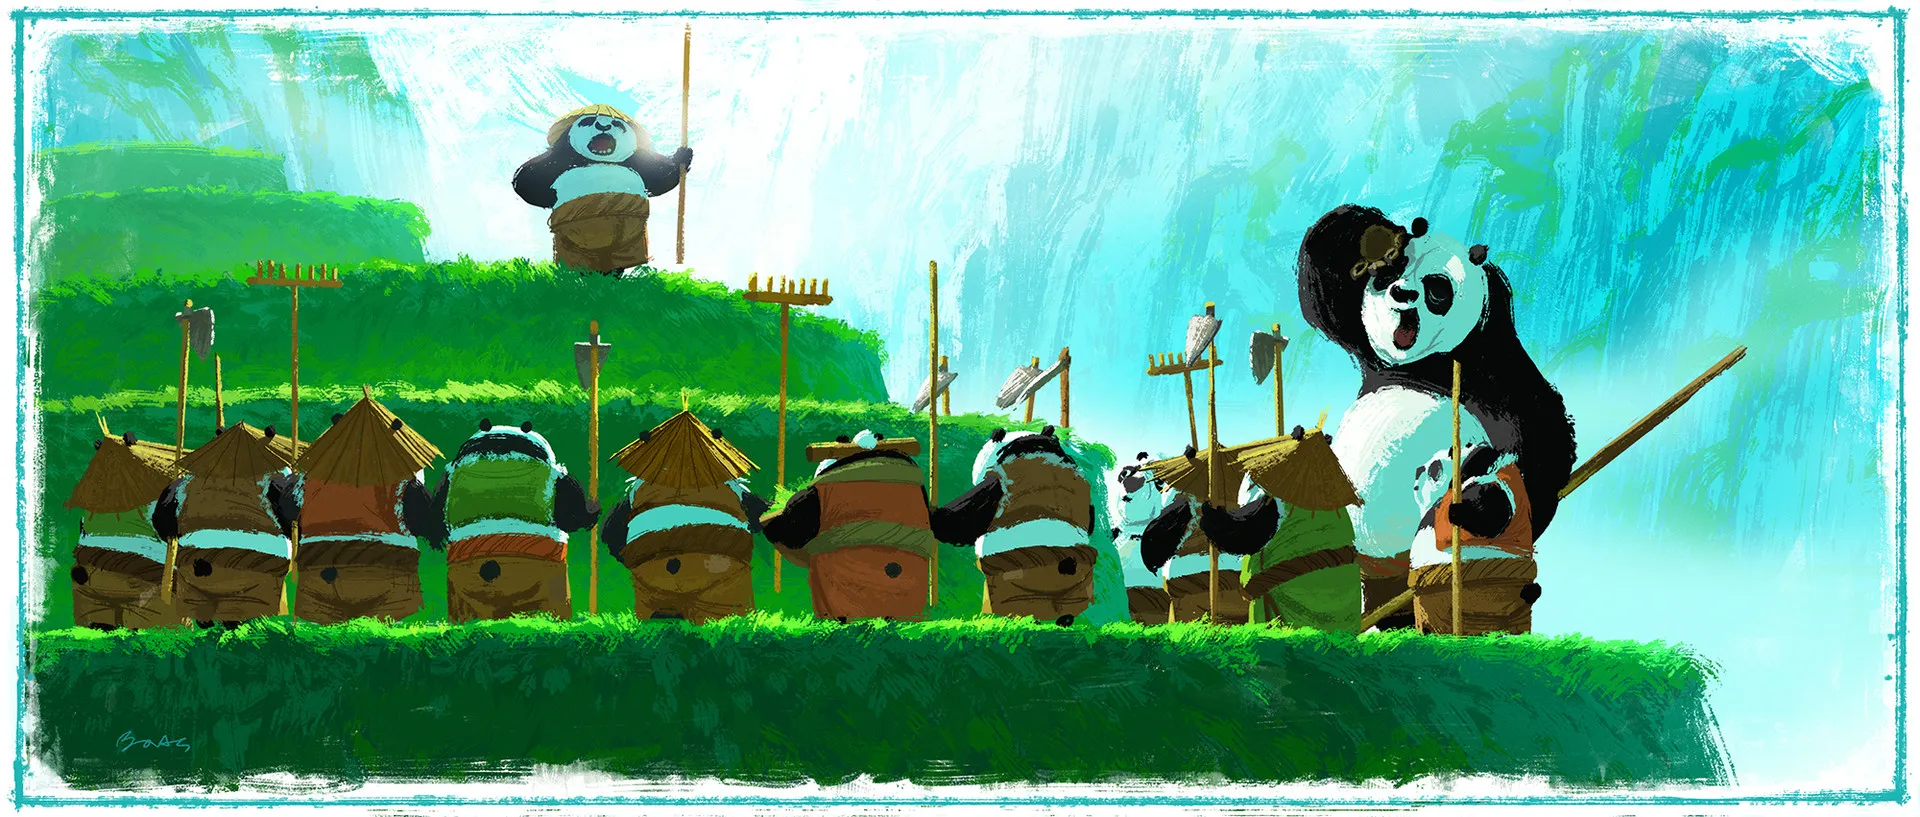 Visual development for Kung Fu Panda 3's Panda Village by Max Boas.